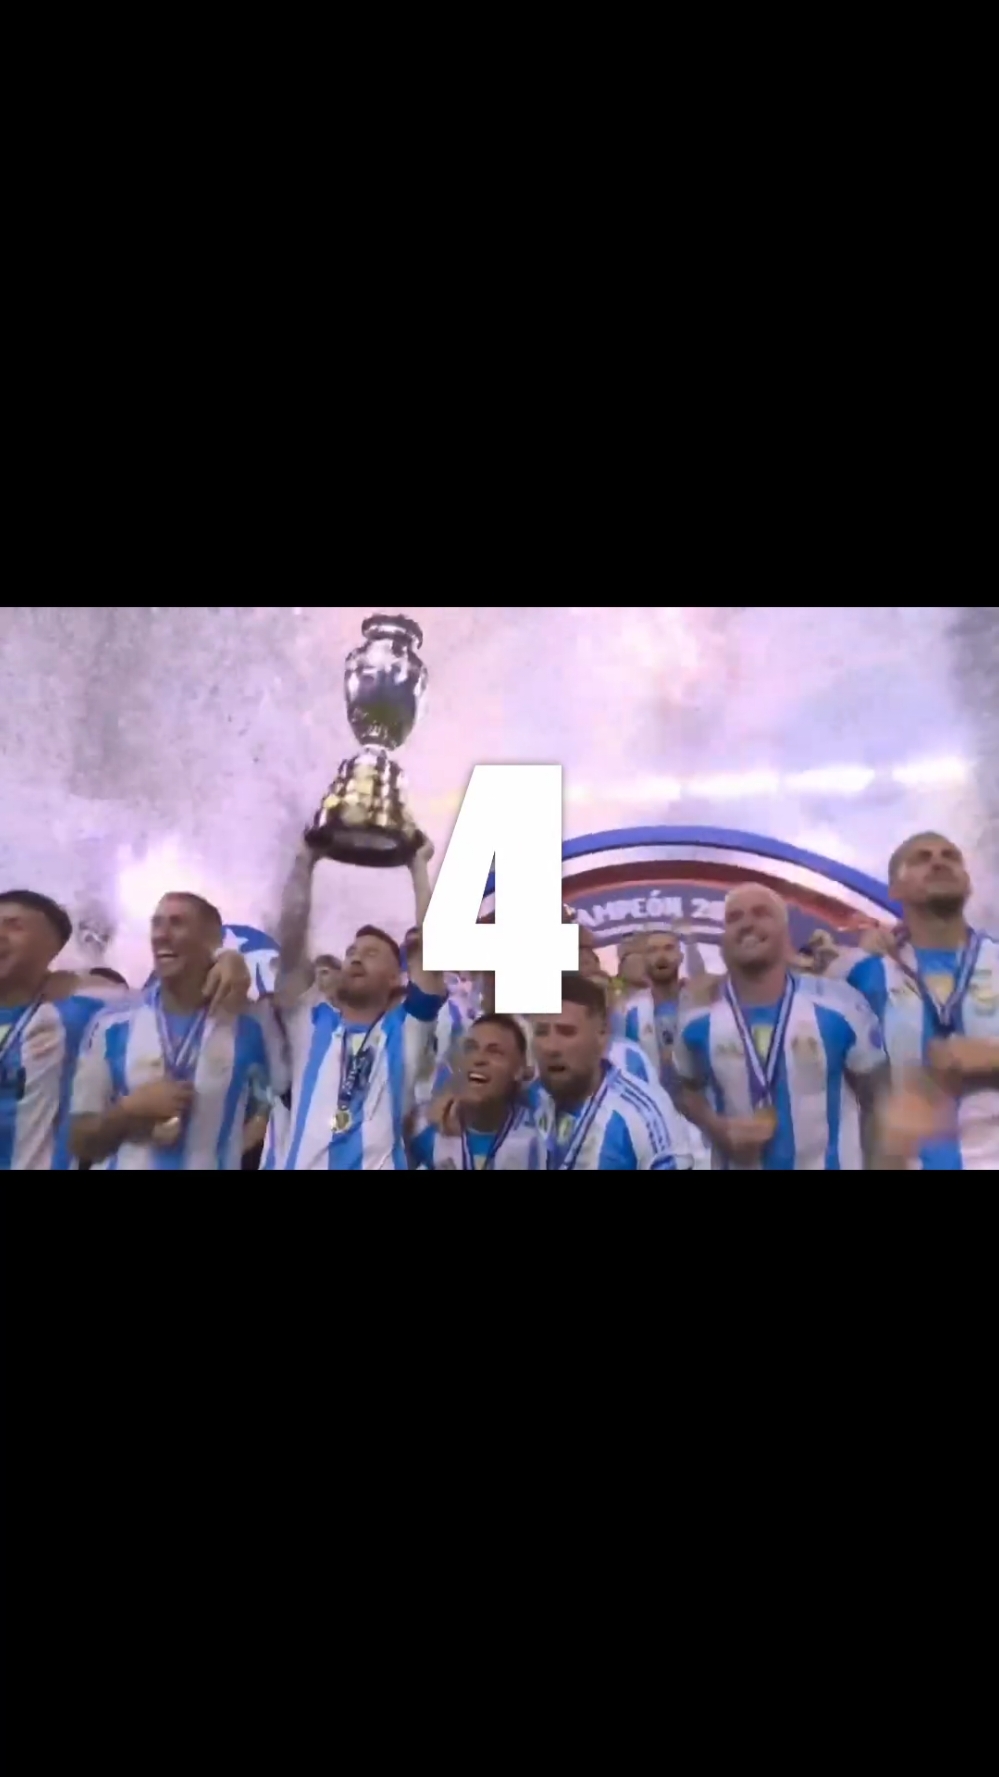 ¡1, 2, 3, 4! A seguir festejando 🥳 #CopaAmérica #Argentina #vamosargentina #OtraVezJuntos 💙🤍💙